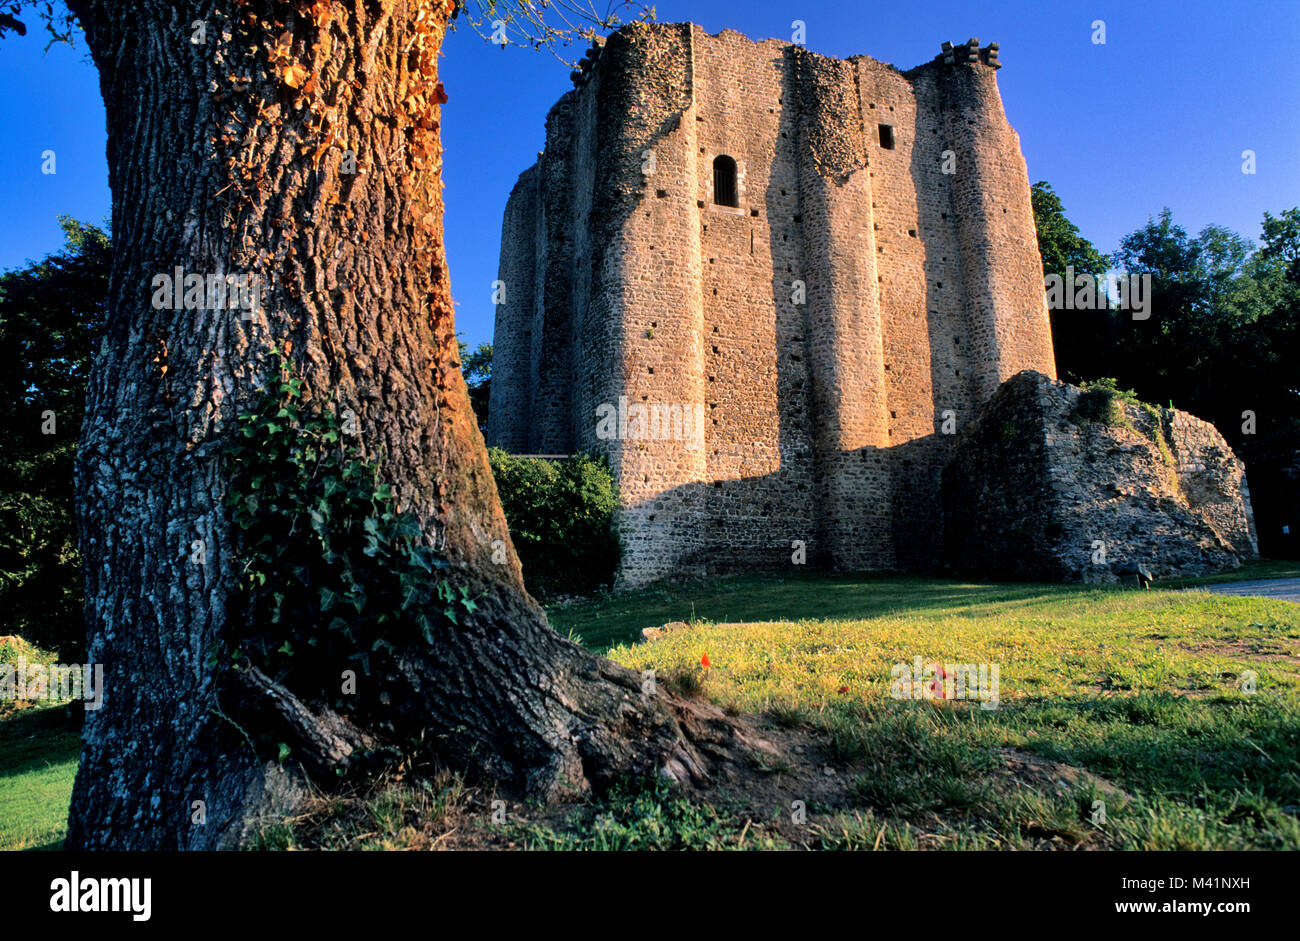 France, Vendee, Pouzauges,12th century castle given to Gilles de Rais as his wife's dowry Stock Photo